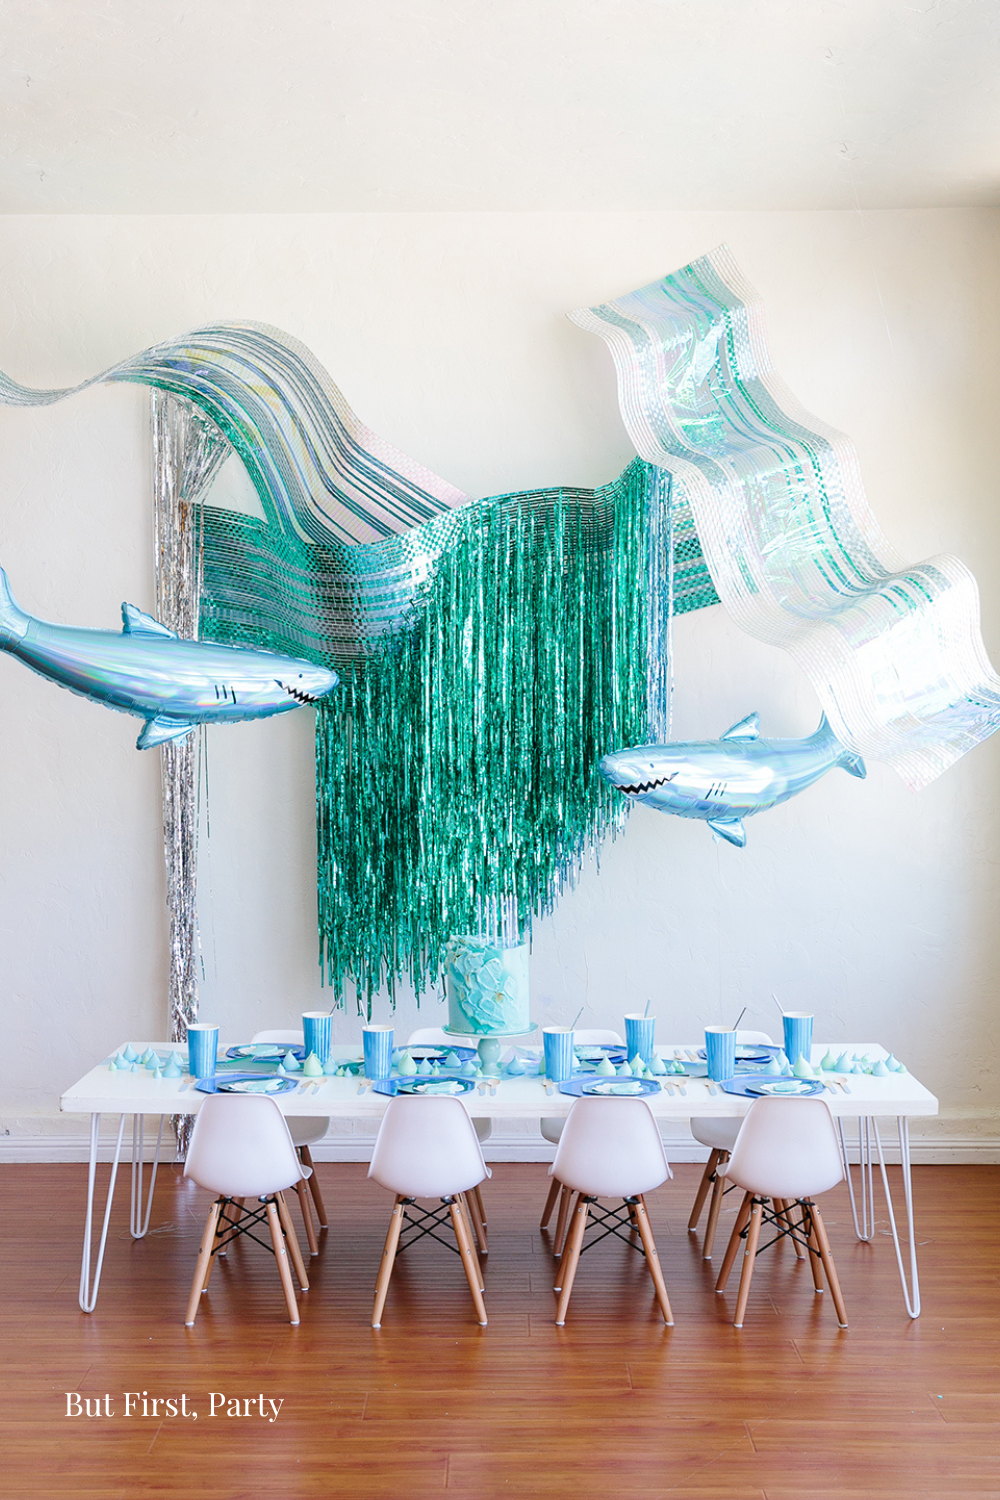 Shark-themed birthday party decoration ideas.